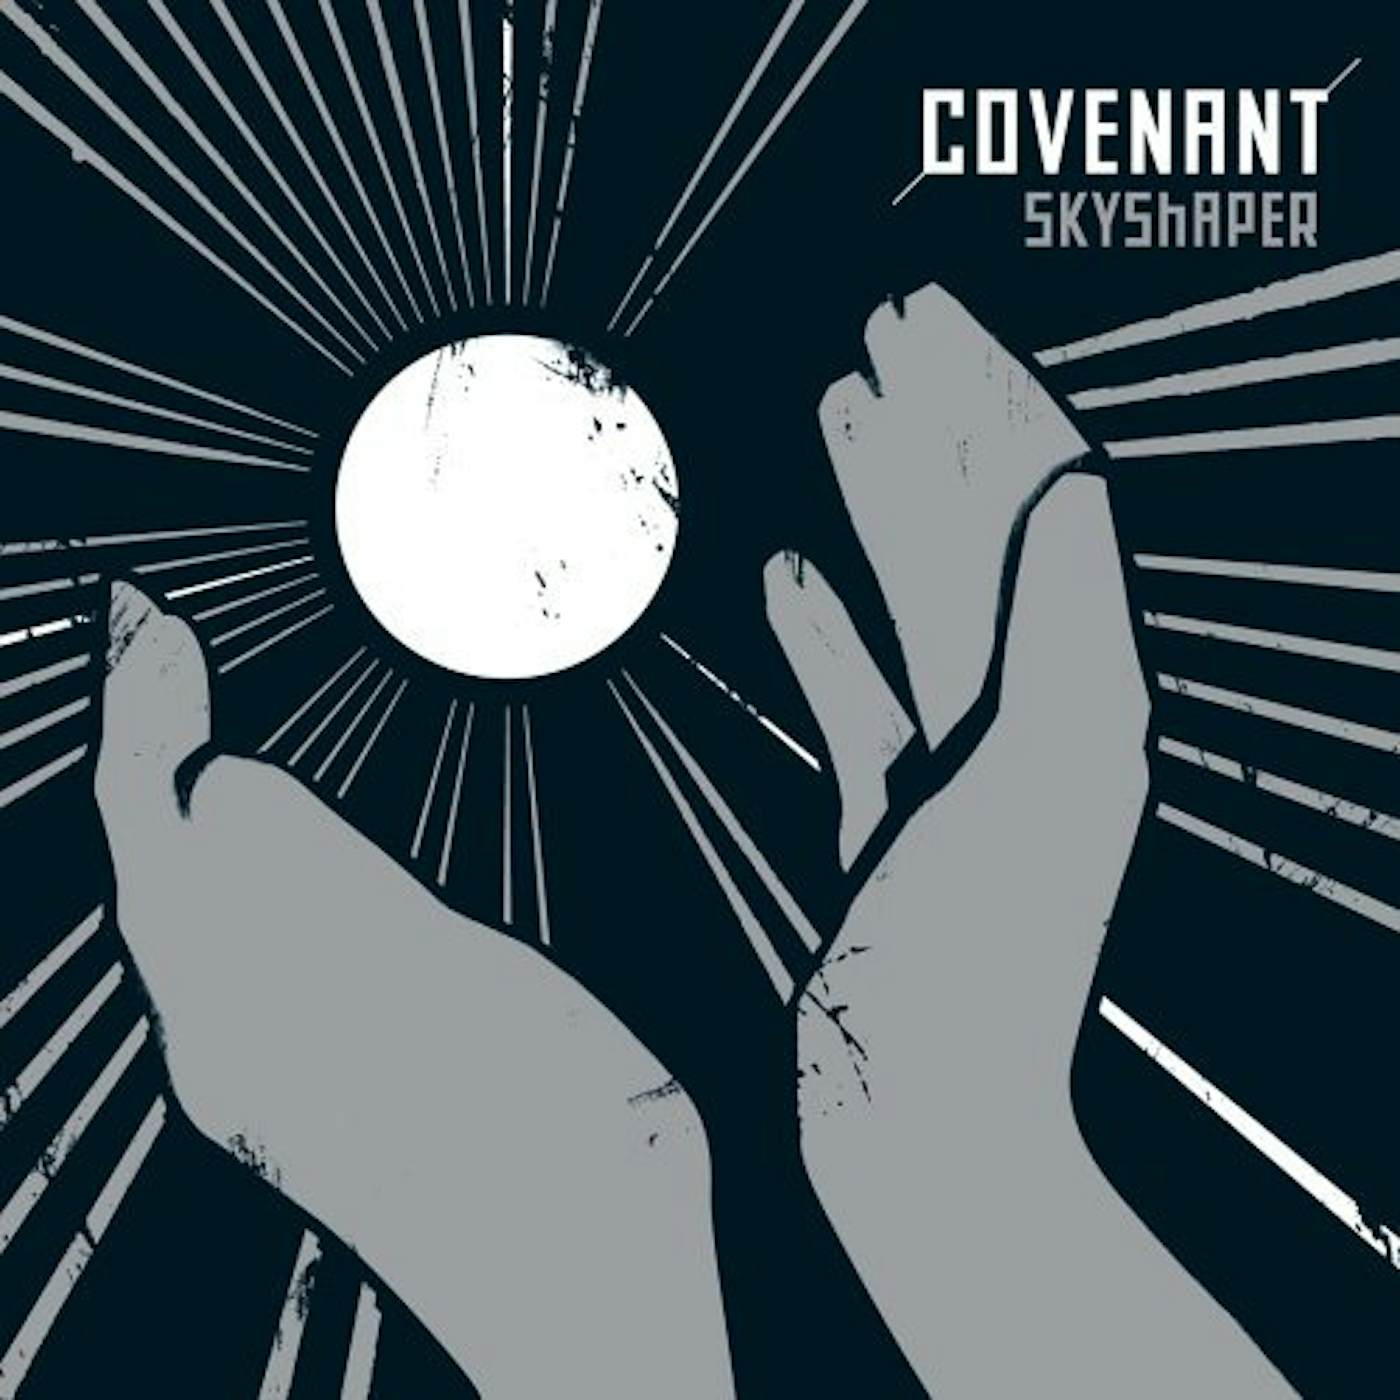 Covenant SKYSHAPER CD